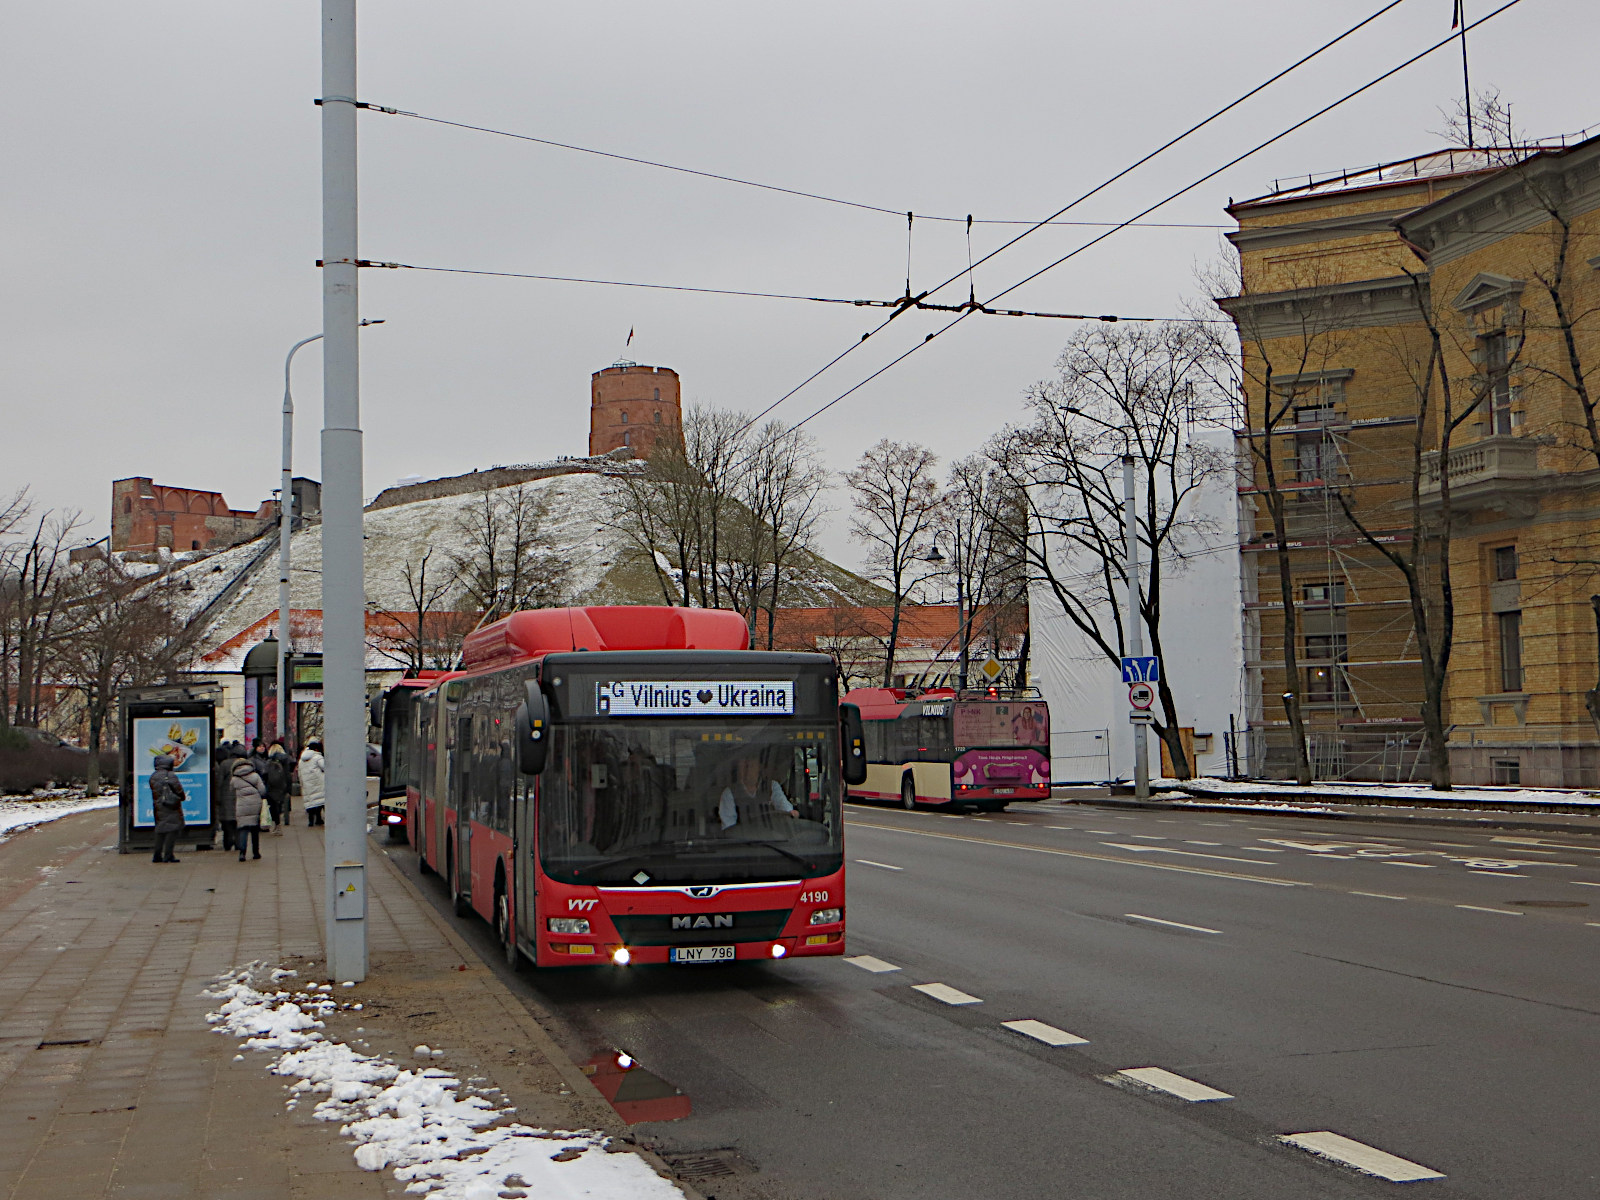 MAN Lions City G 4190 Vilniaus vieasis transportas, UAB - Vilnius